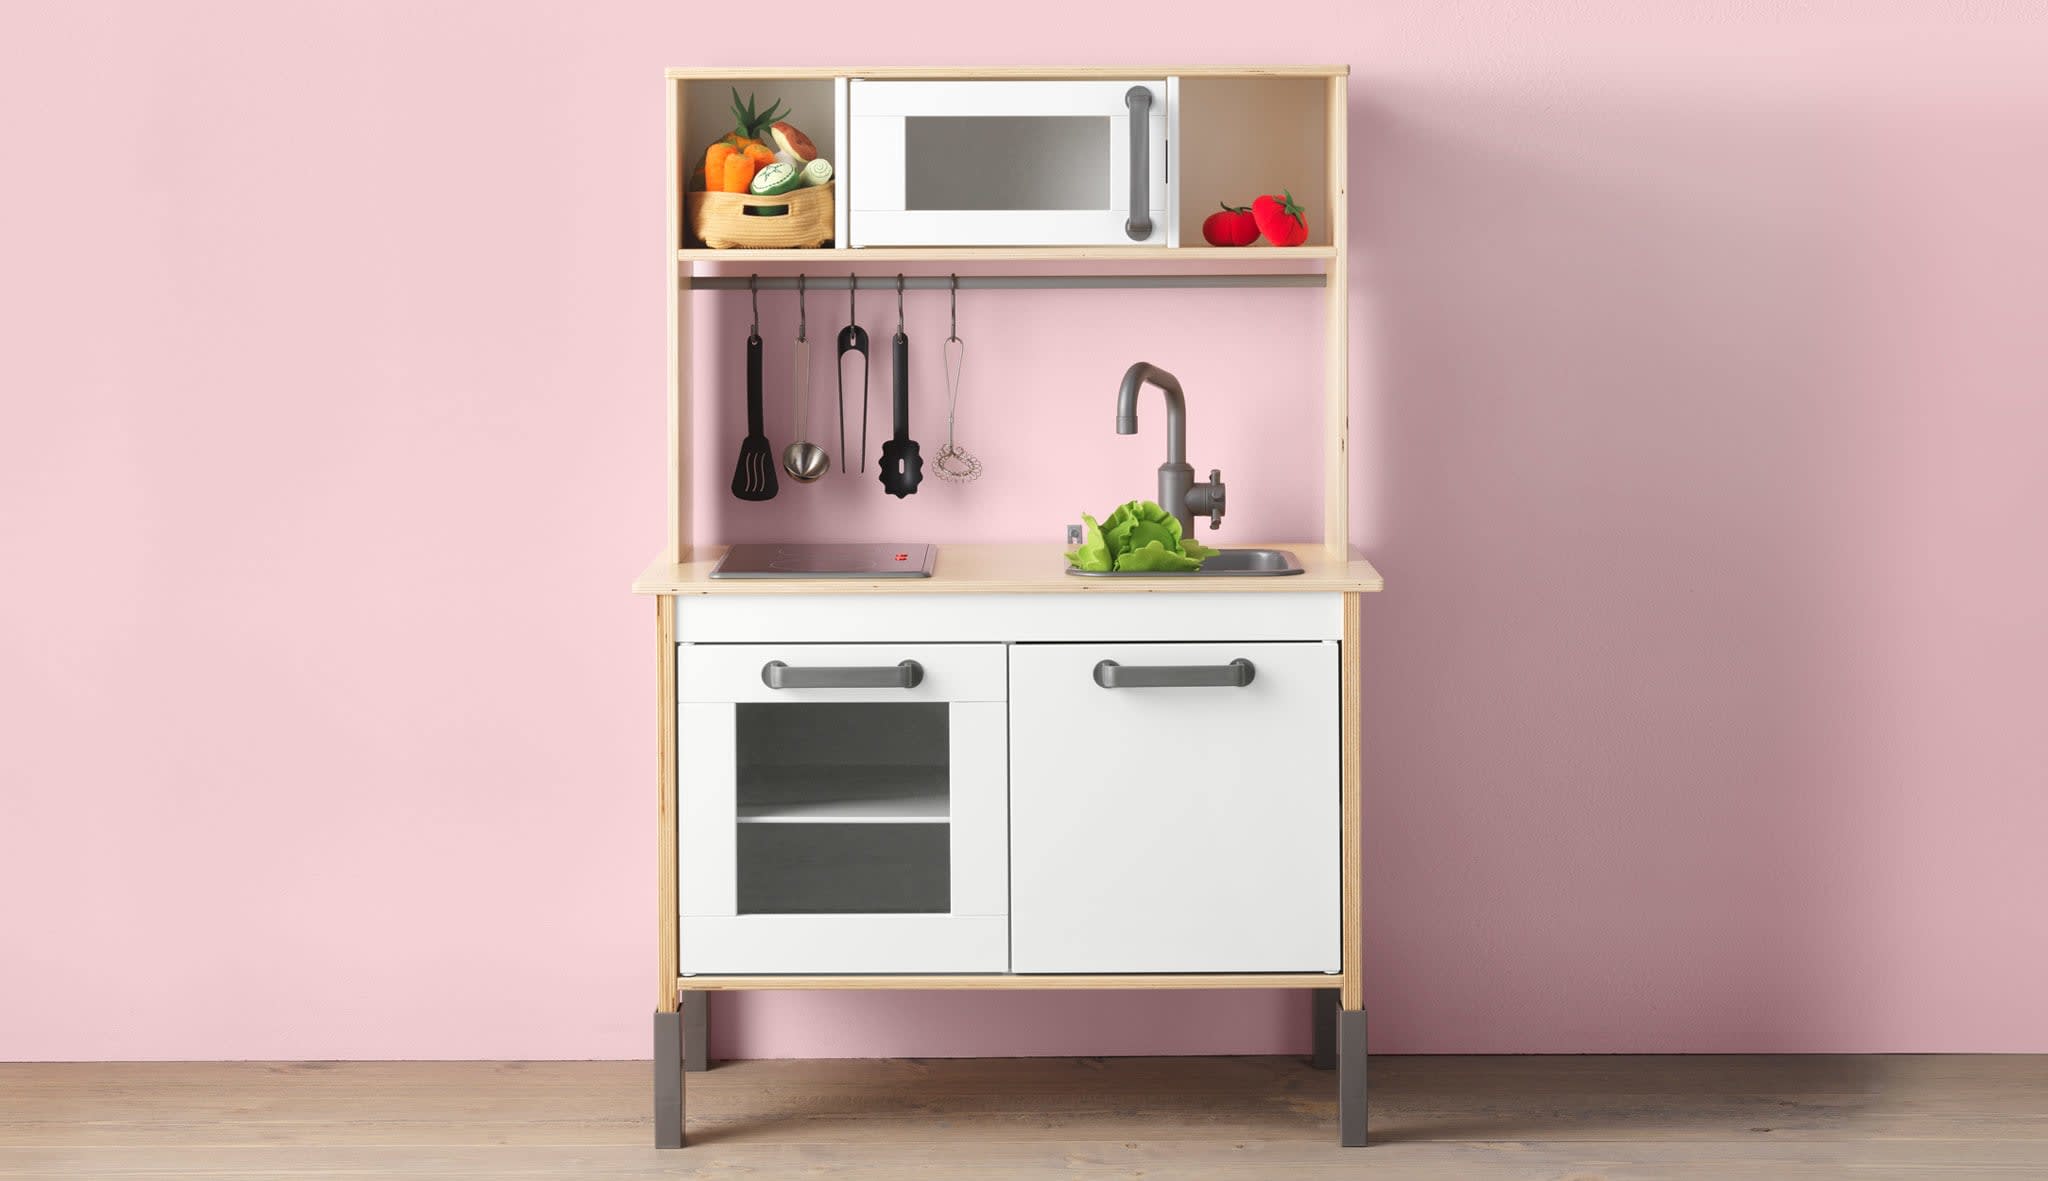 IKEA’s DUKTIG Play Kitchen Remodel Image